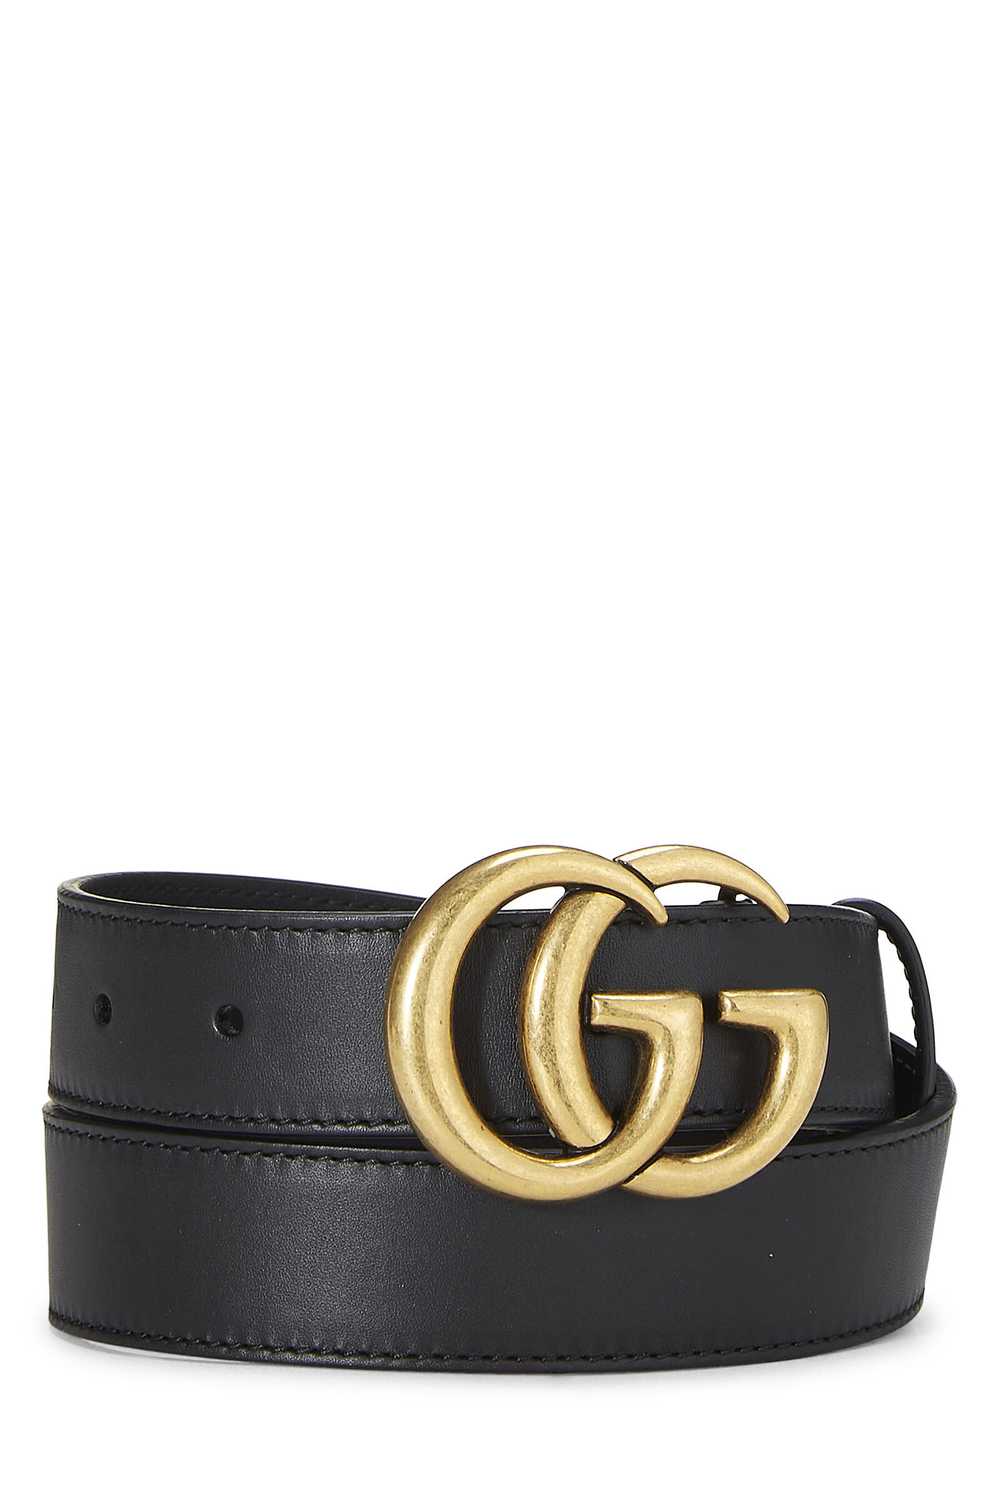 Black Leather GG Marmont Belt - image 1